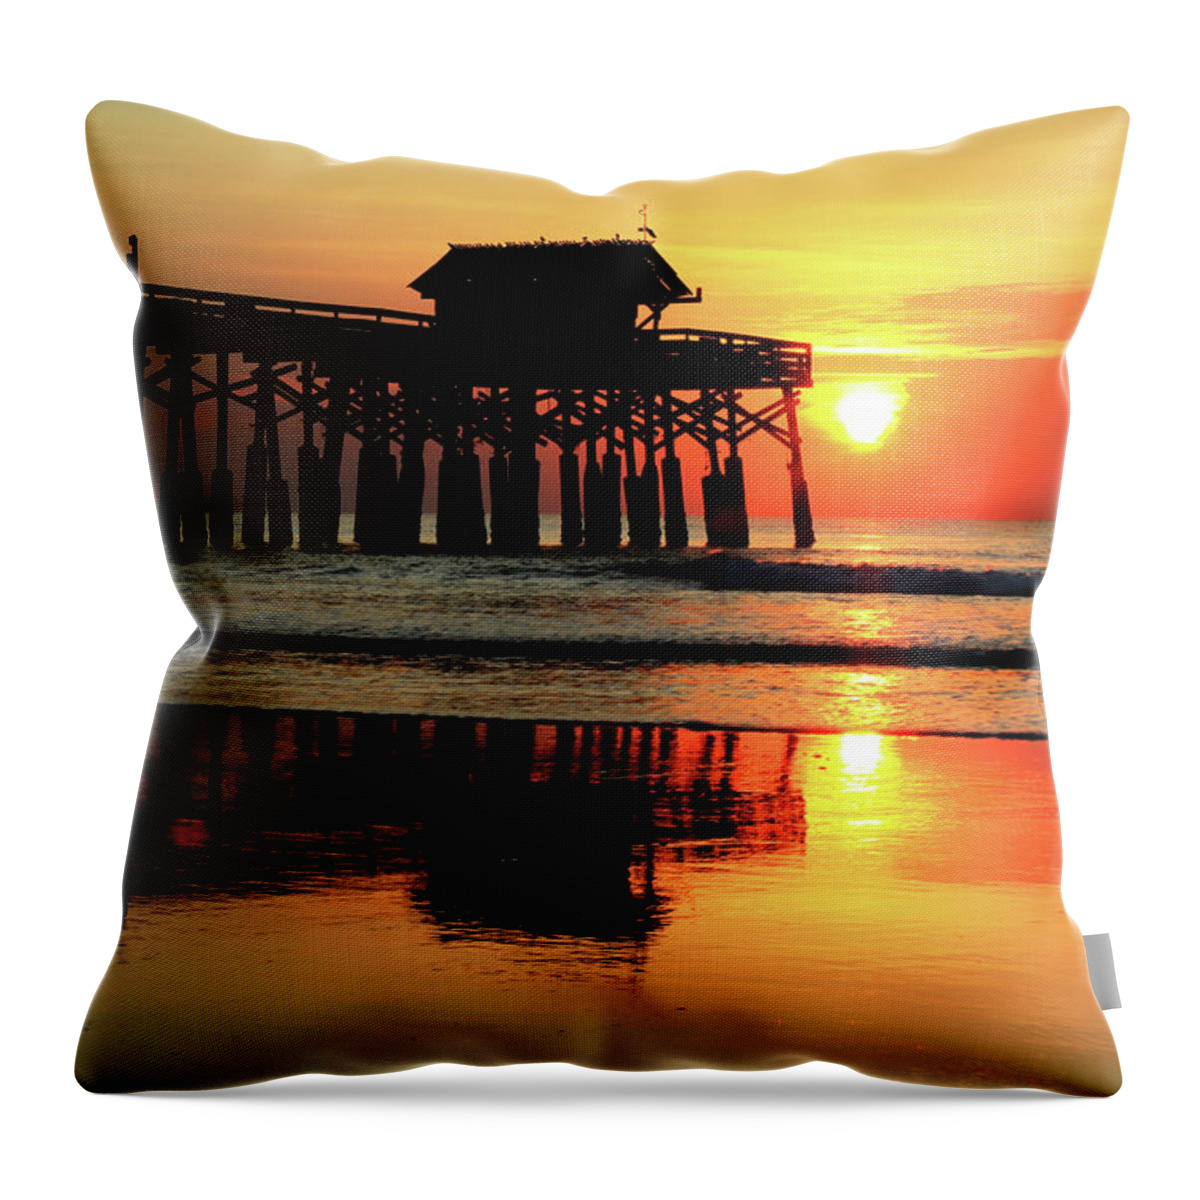 Cocoa Beach Pier Throw Pillow featuring the photograph Hot Sunrise Over Cocoa Beach Pier by Carol Montoya